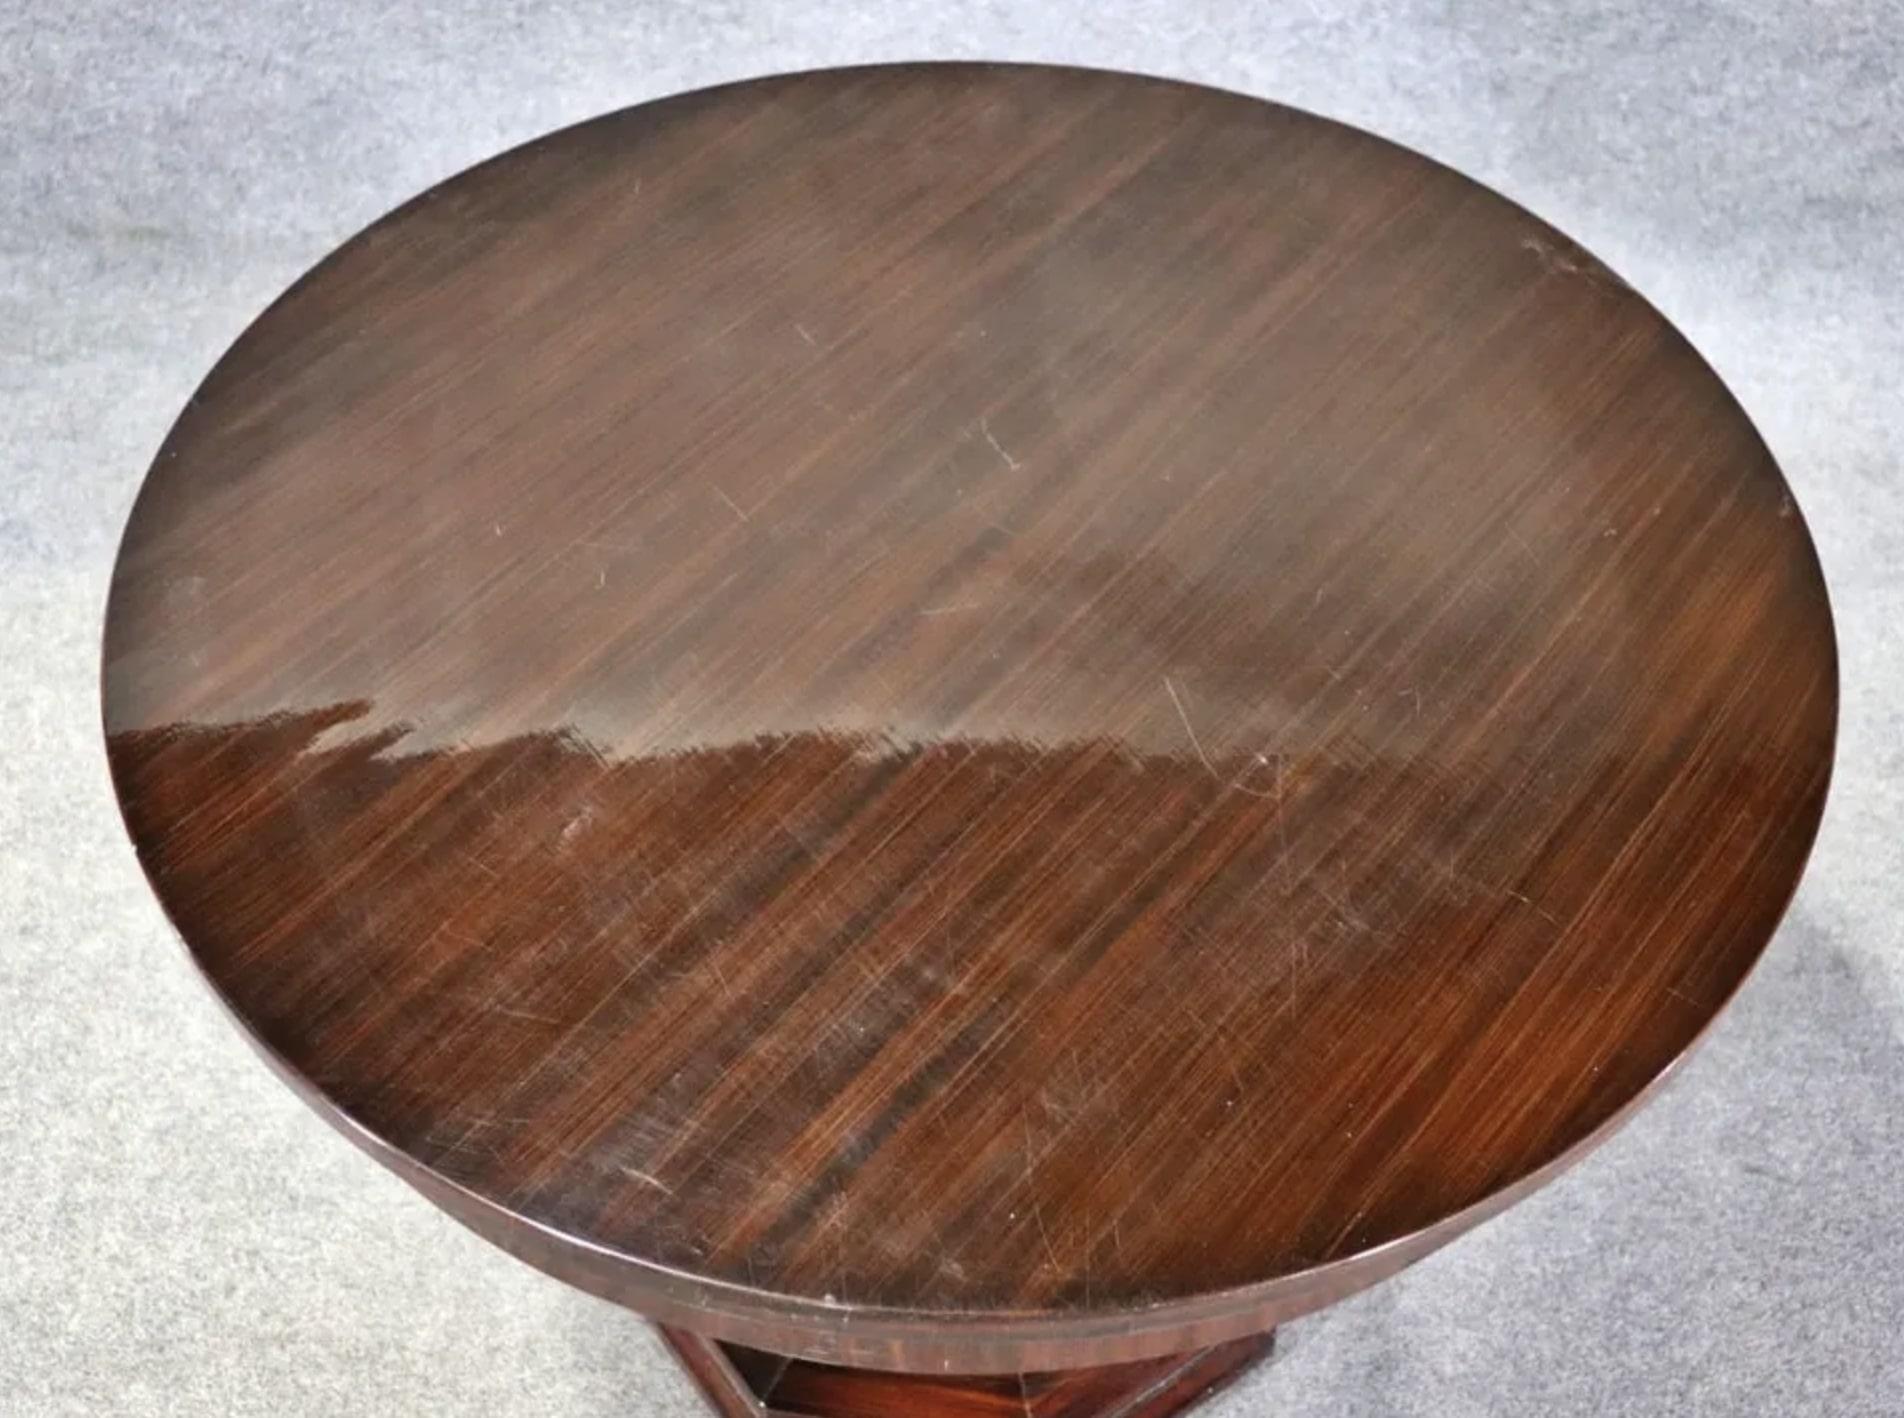 Round art deco inspired center table in deep mahogany grain. 
Please confirm location NY or NJ